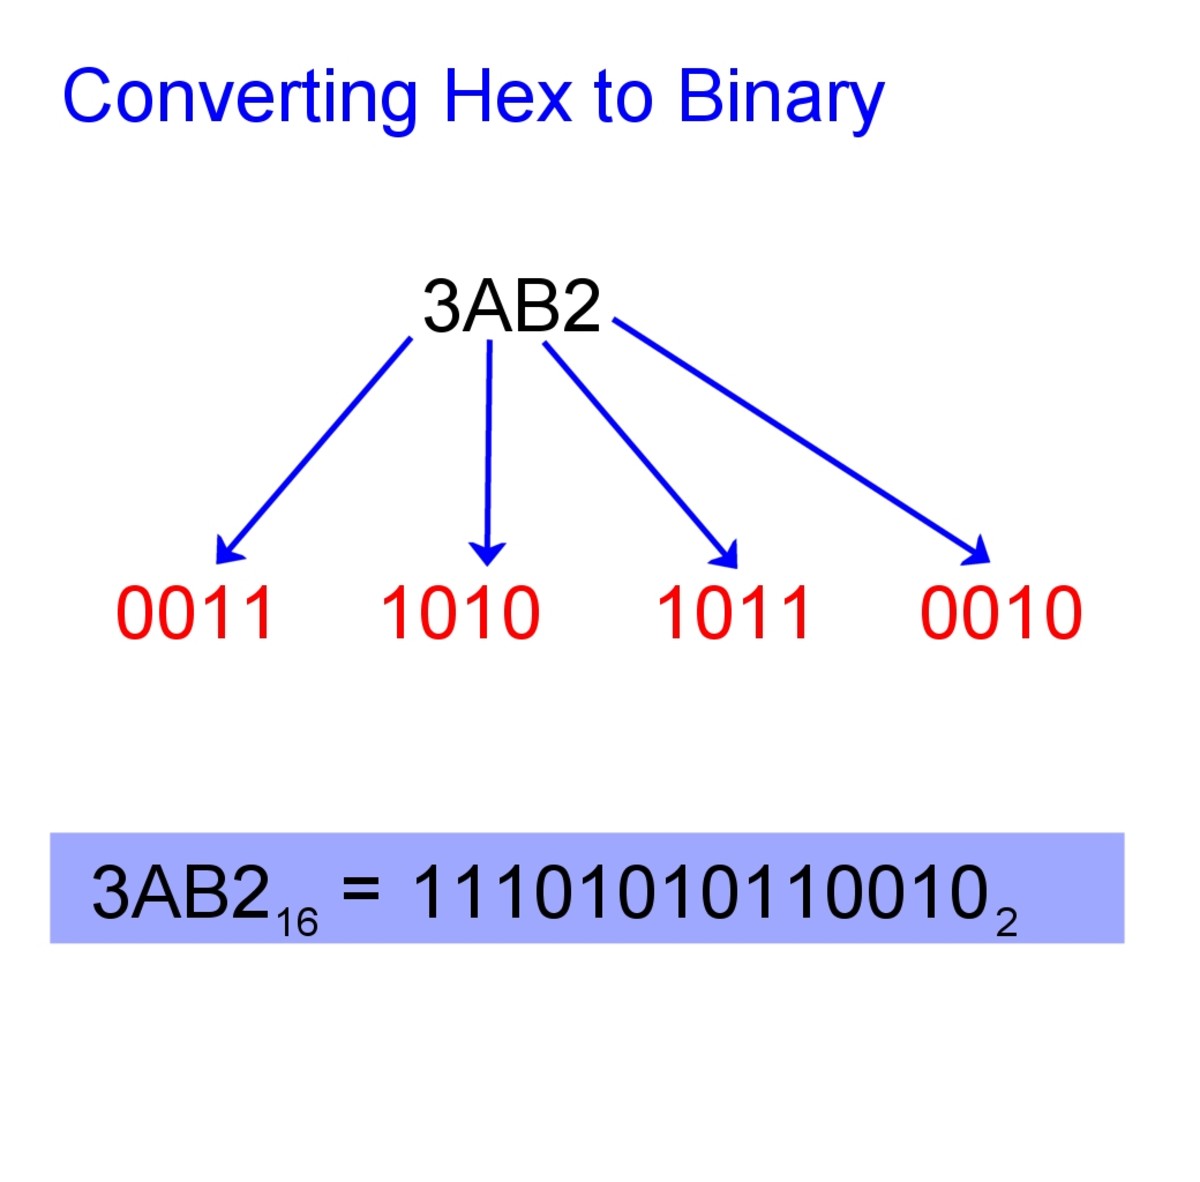 Converting hex to binary